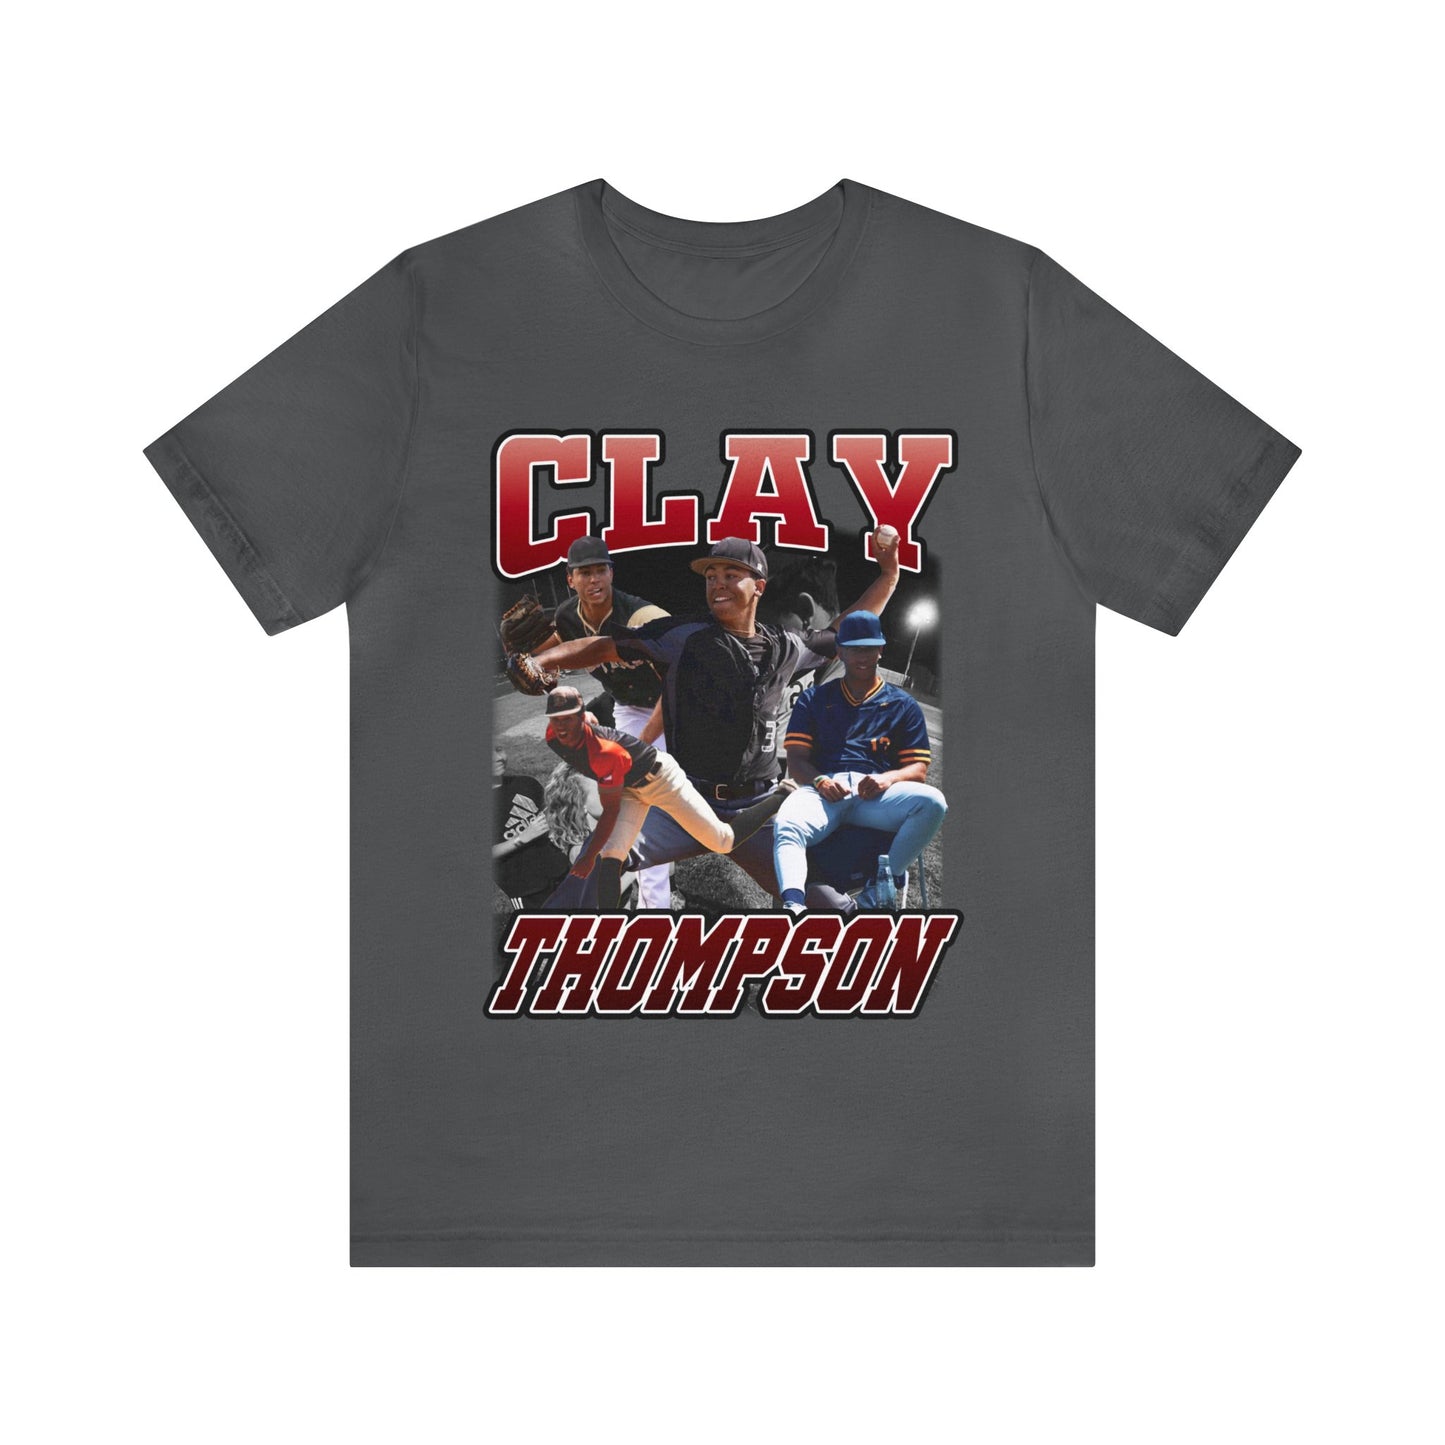 Clay Thompson: GameDay Tee